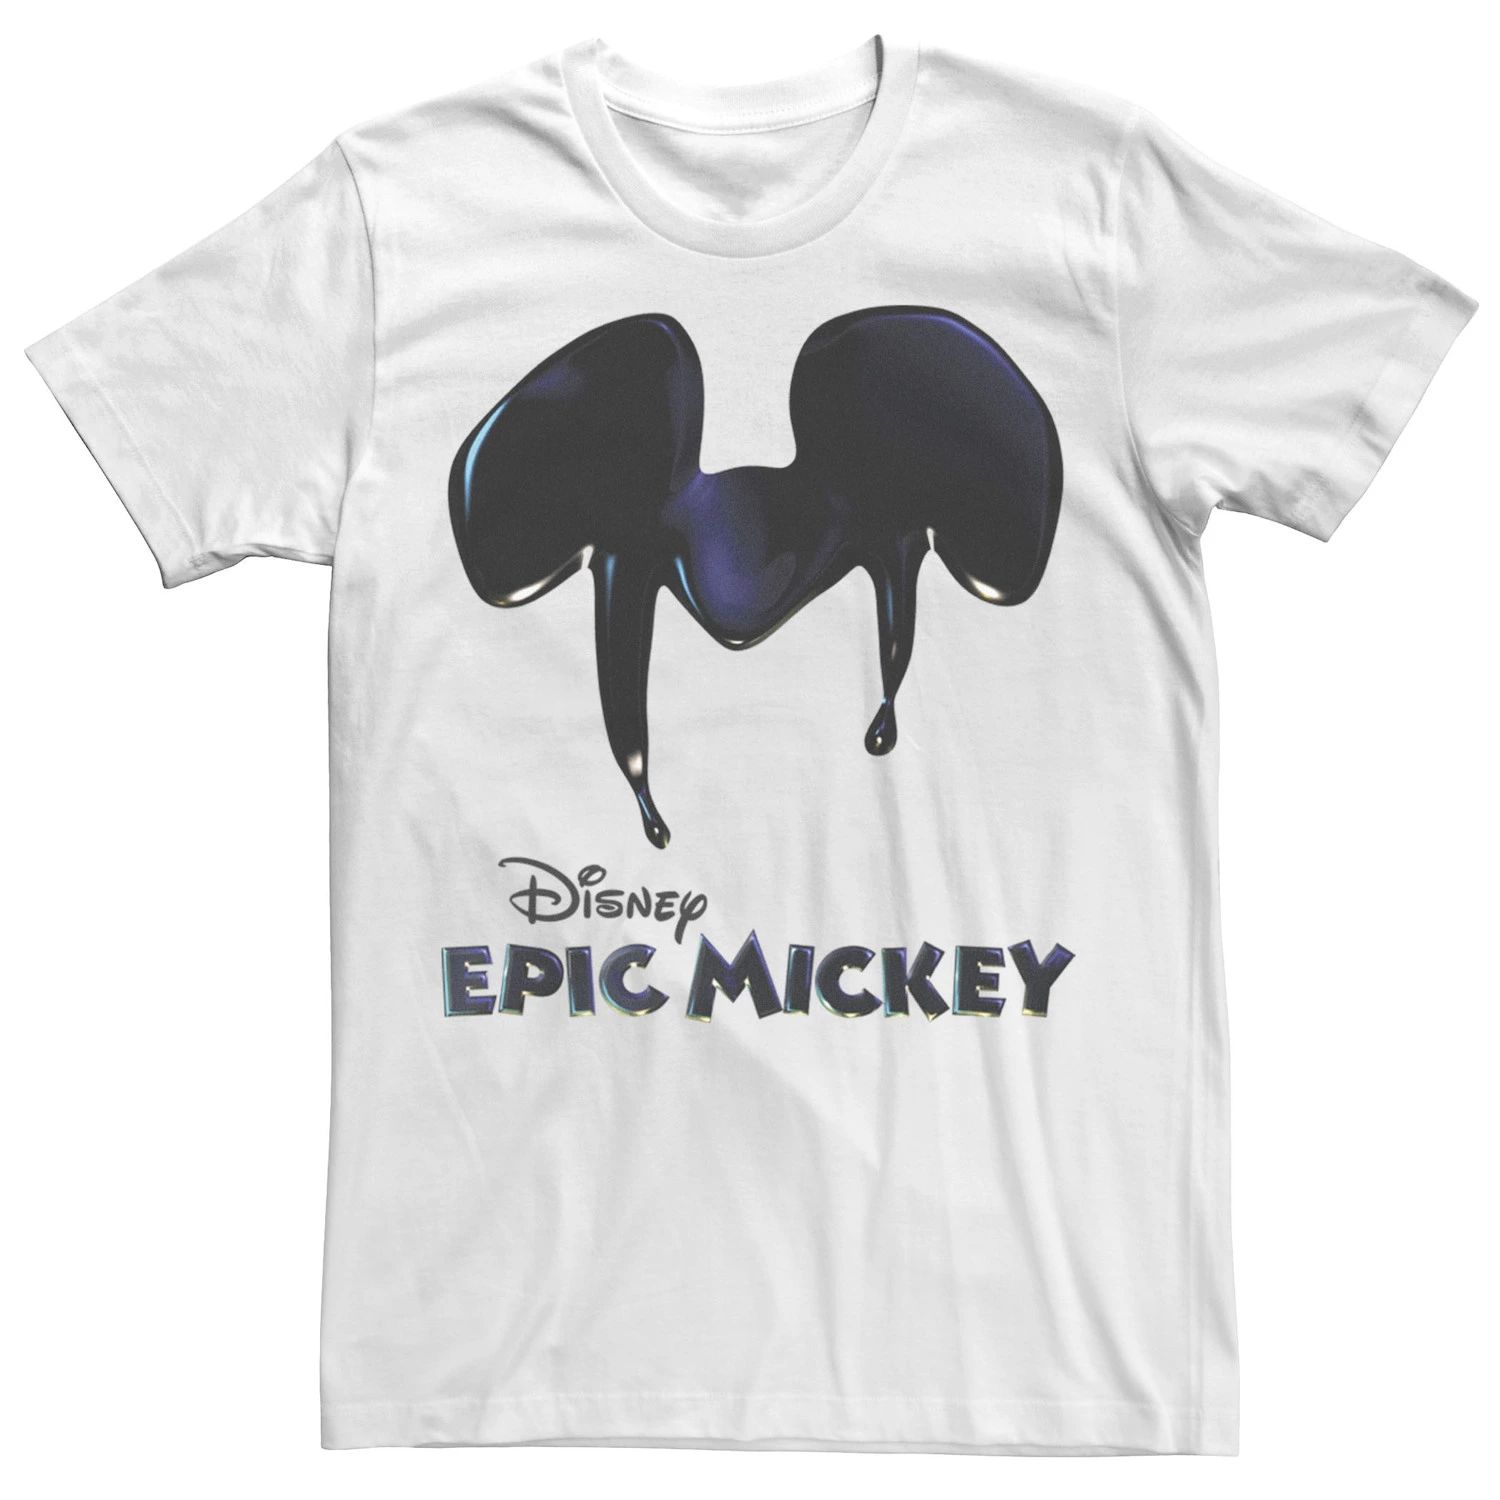 Мужская футболка Disney Epic Mickey Dark Paint Drip с логотипом Licensed Character мужская футболка с портретом disney epic mickey painting licensed character